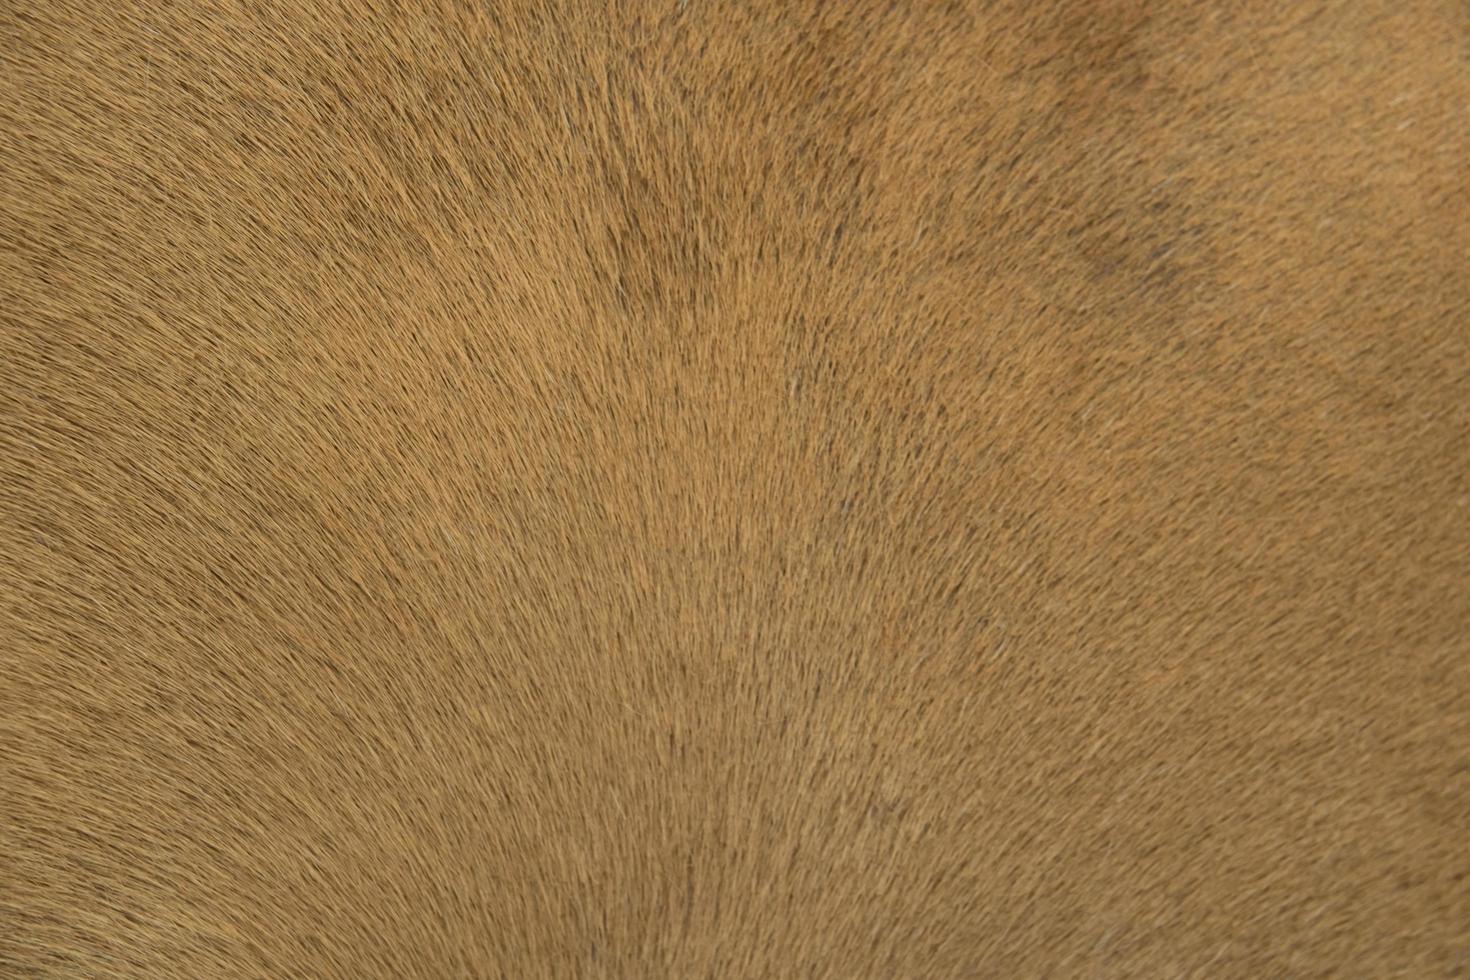 a horse fur close up photo